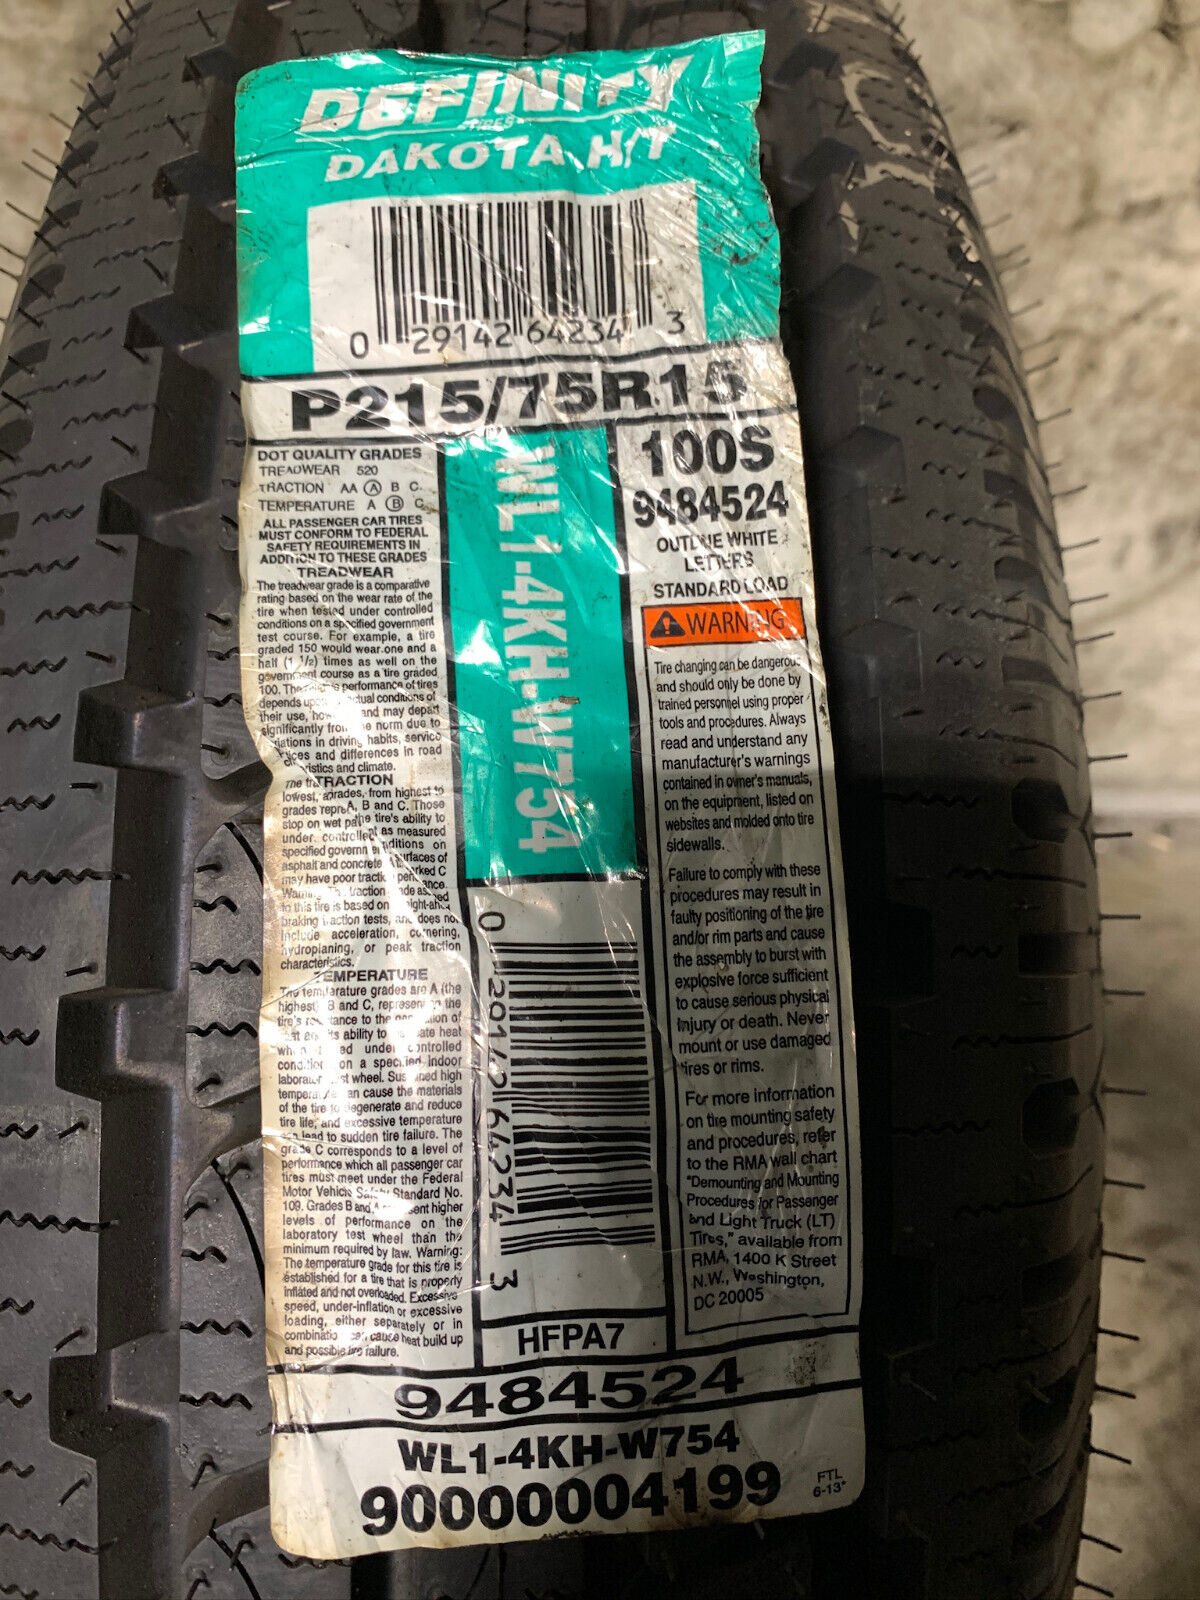 1 New 215 75 15 Definity Dakota H/T Older Production Tire